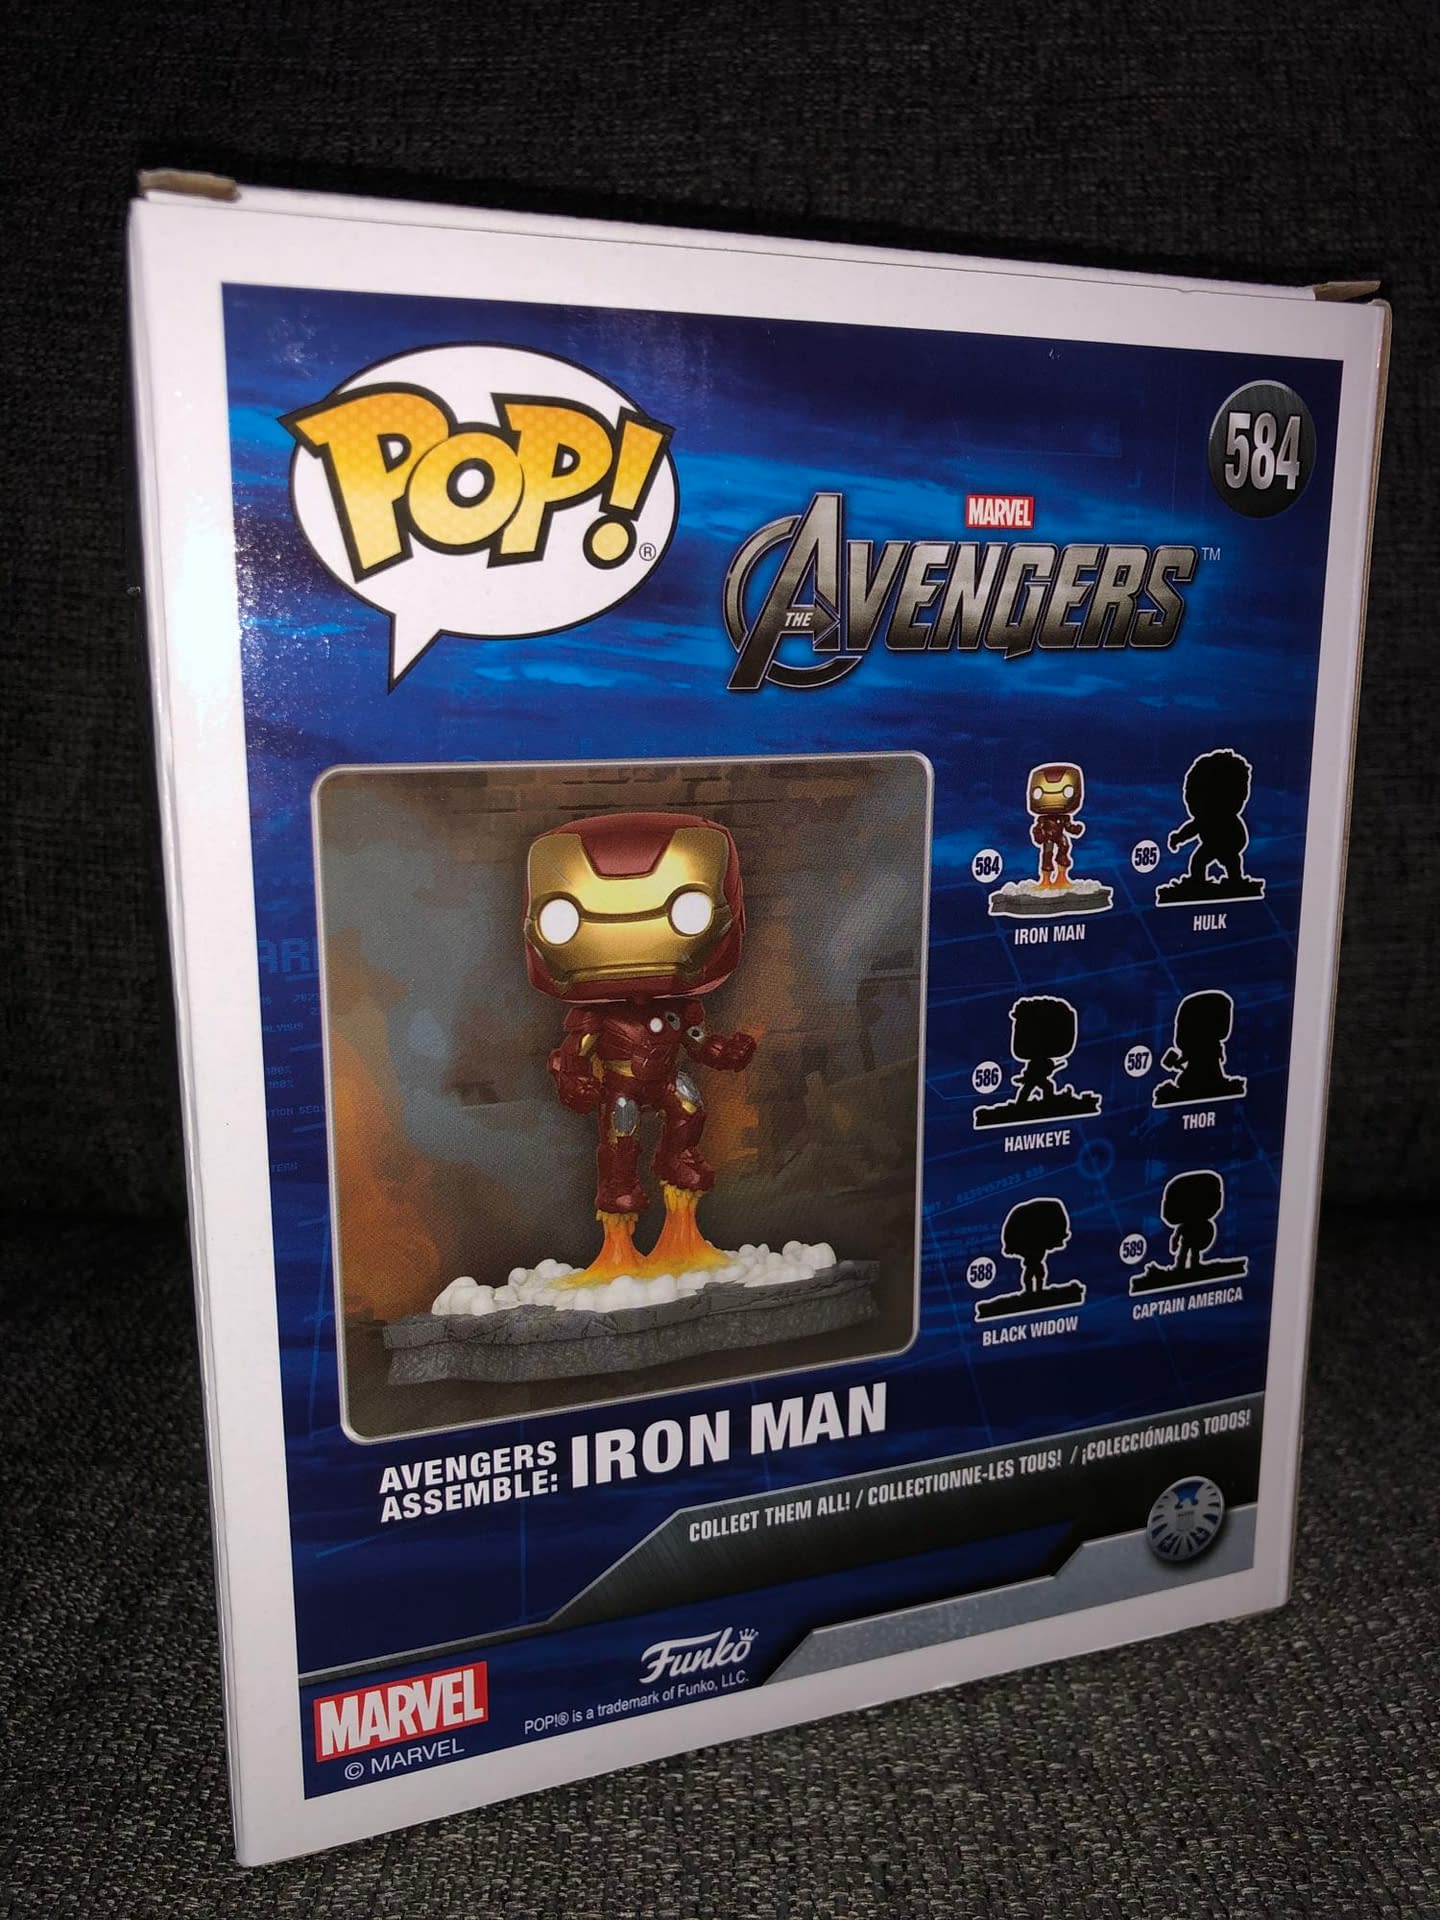 Funko Avengers: Assemble Iron Man Pop Vinyl Has Finally Landed 